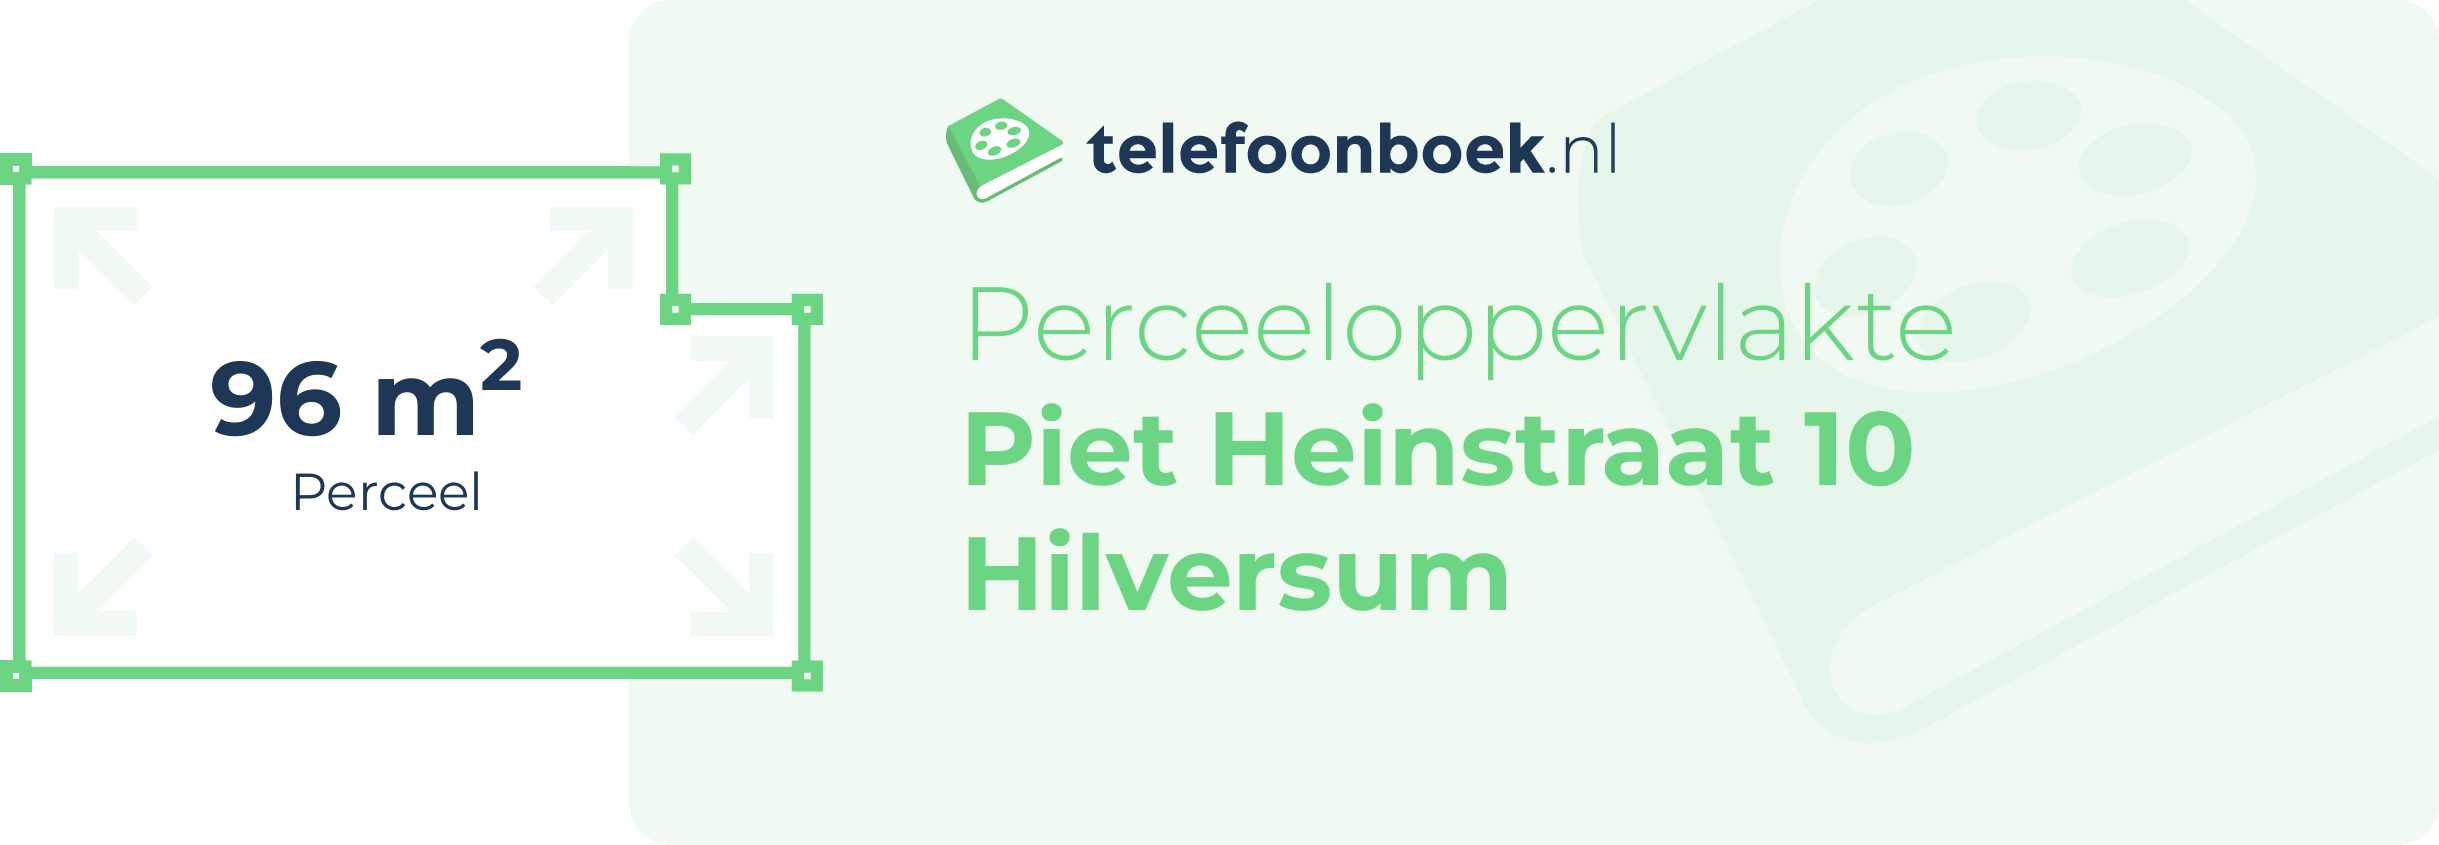 Perceeloppervlakte Piet Heinstraat 10 Hilversum